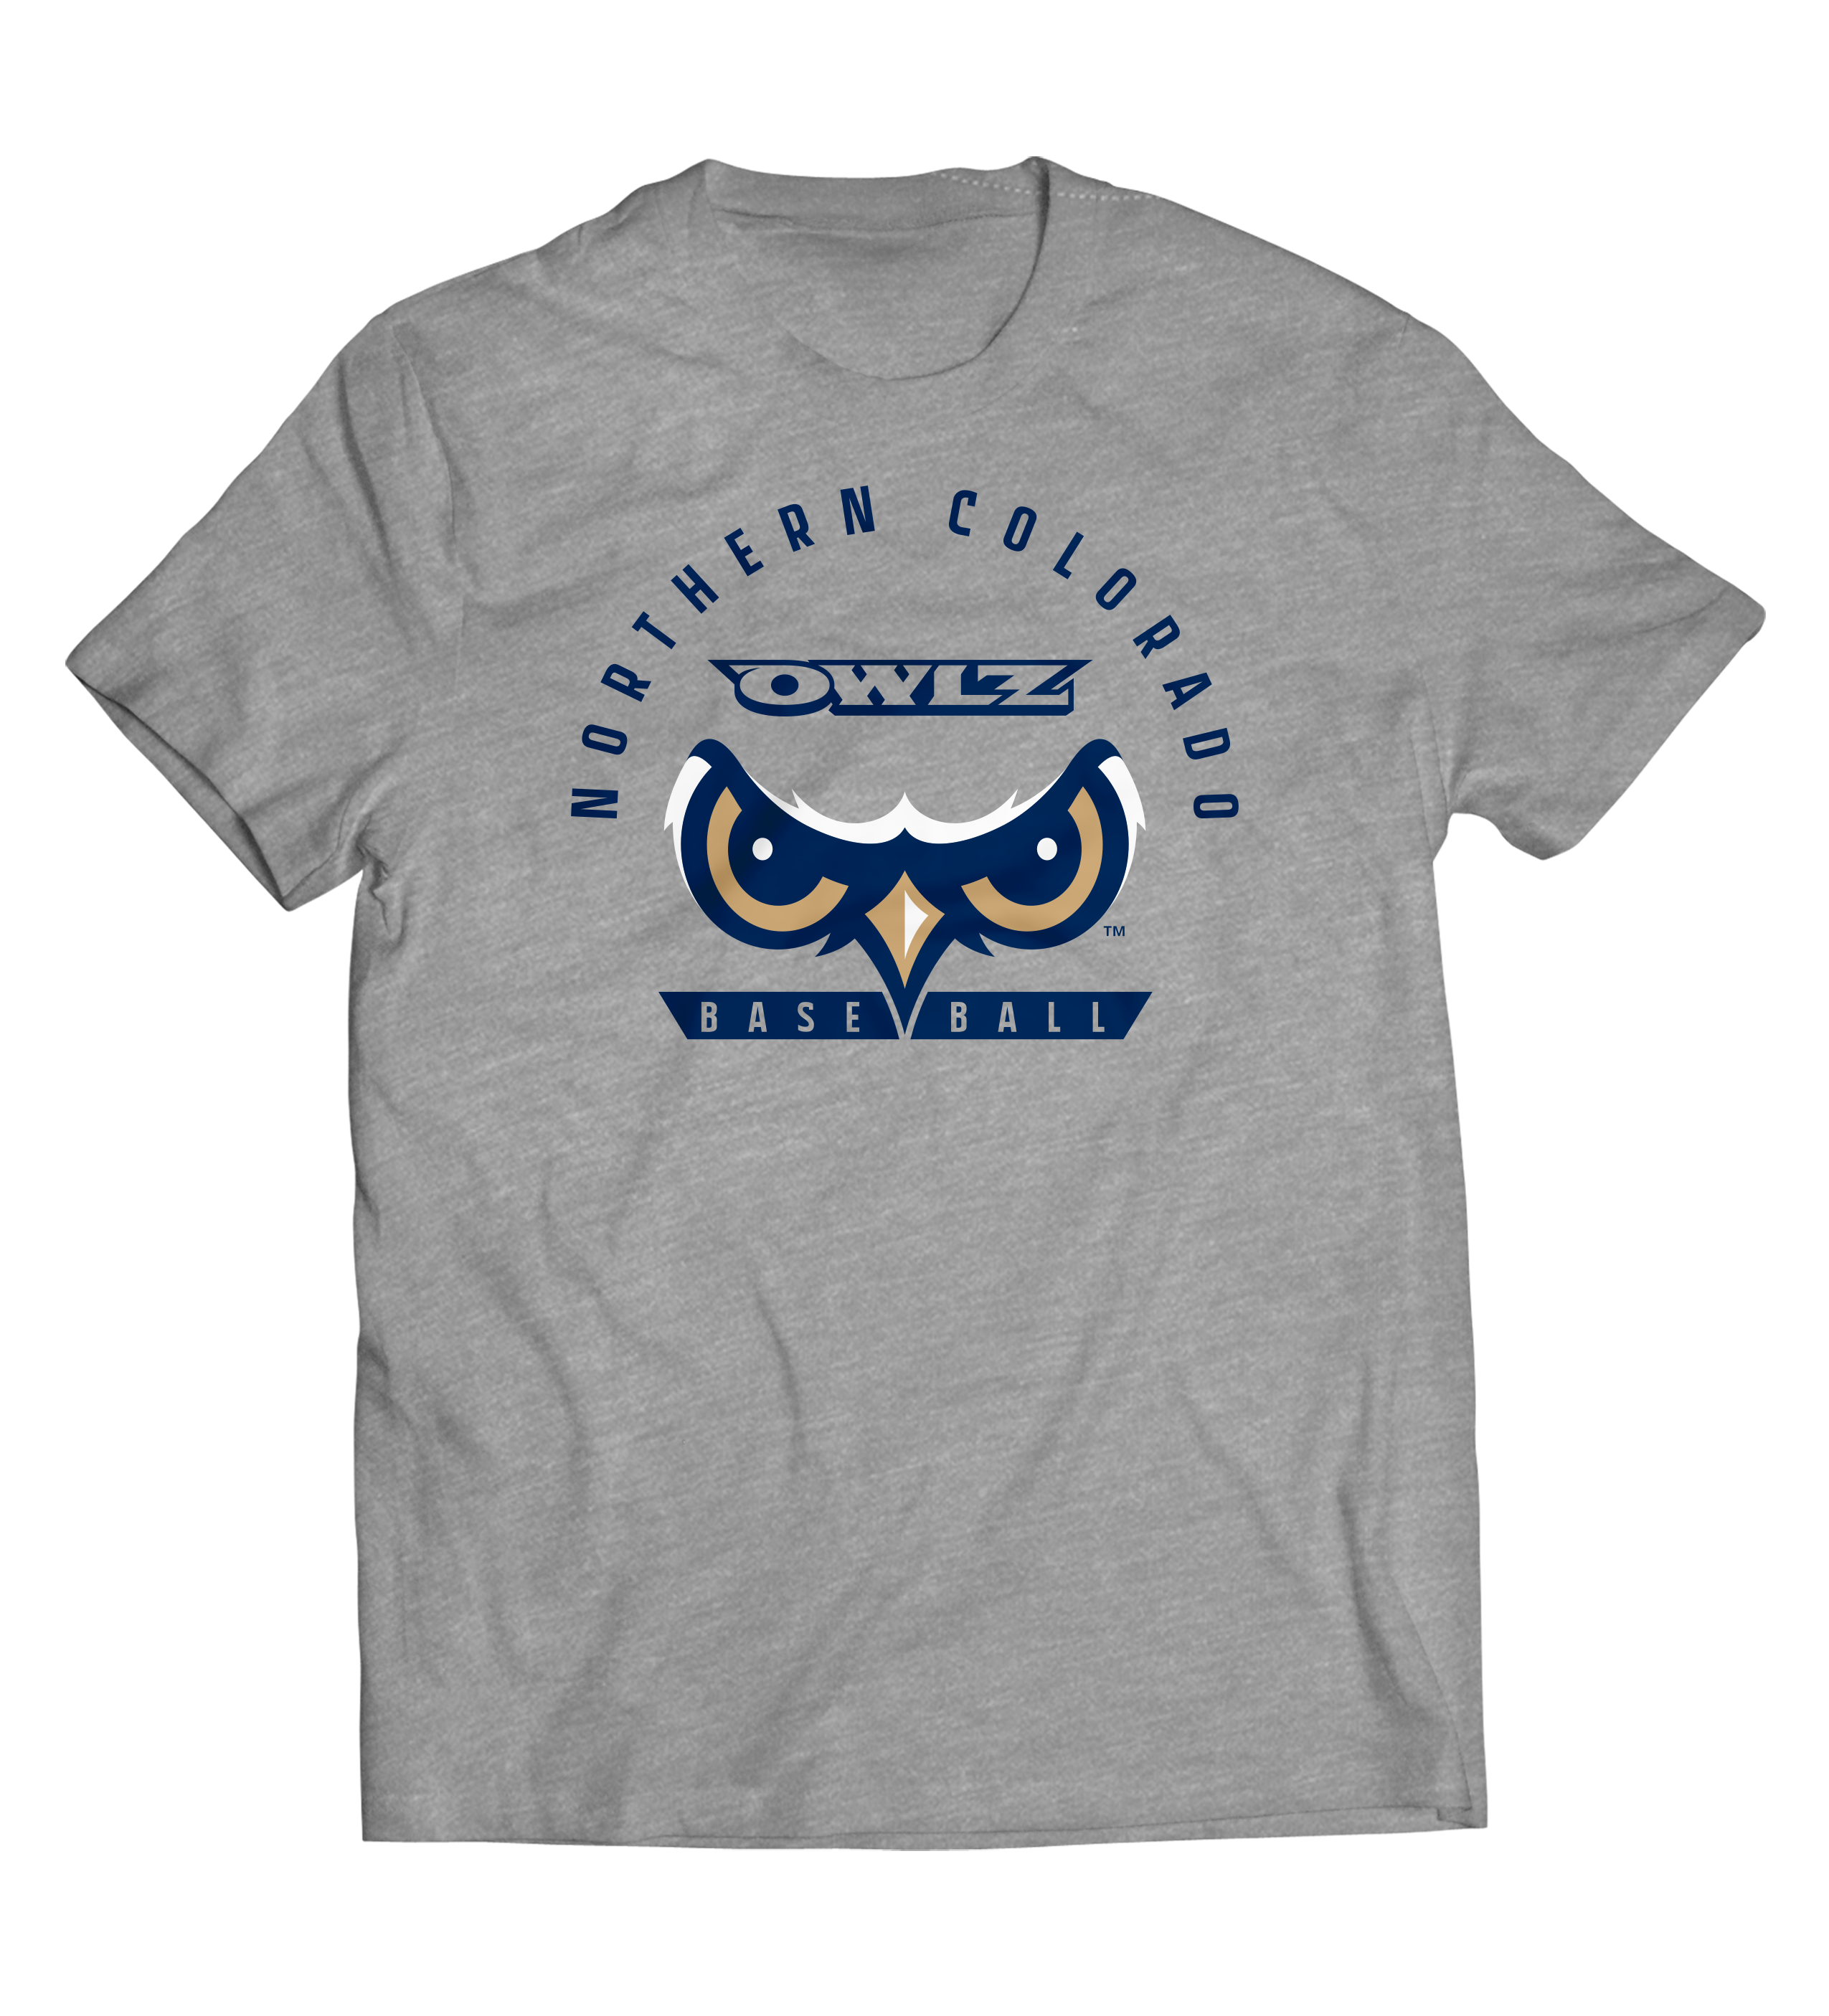 Owlz Northern Colorado Baseball T-shirt